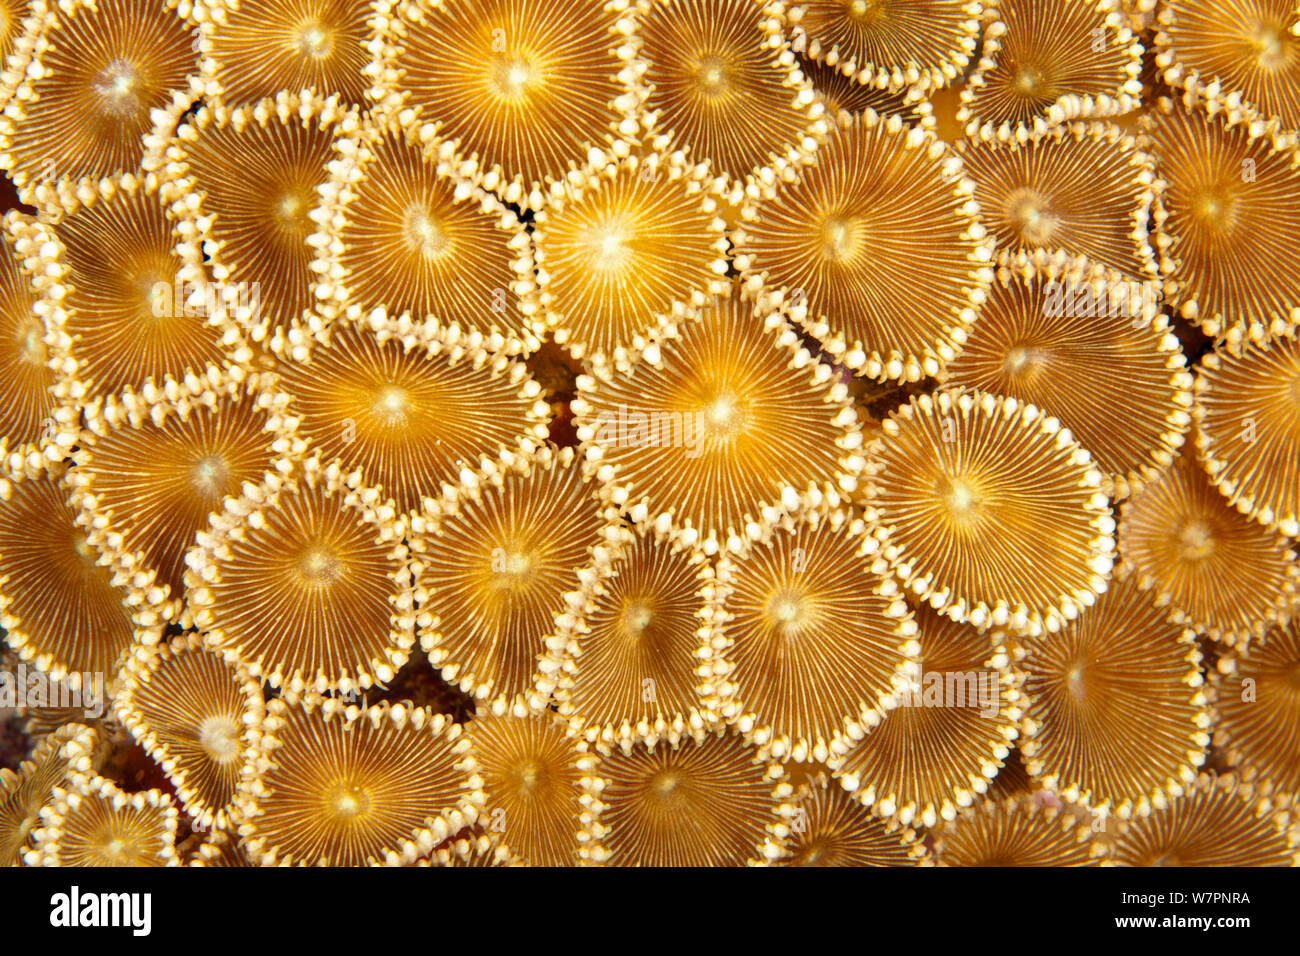 Anemone coloniale (Protopalythoa sp.), Maldive, Oceano Indiano Foto Stock